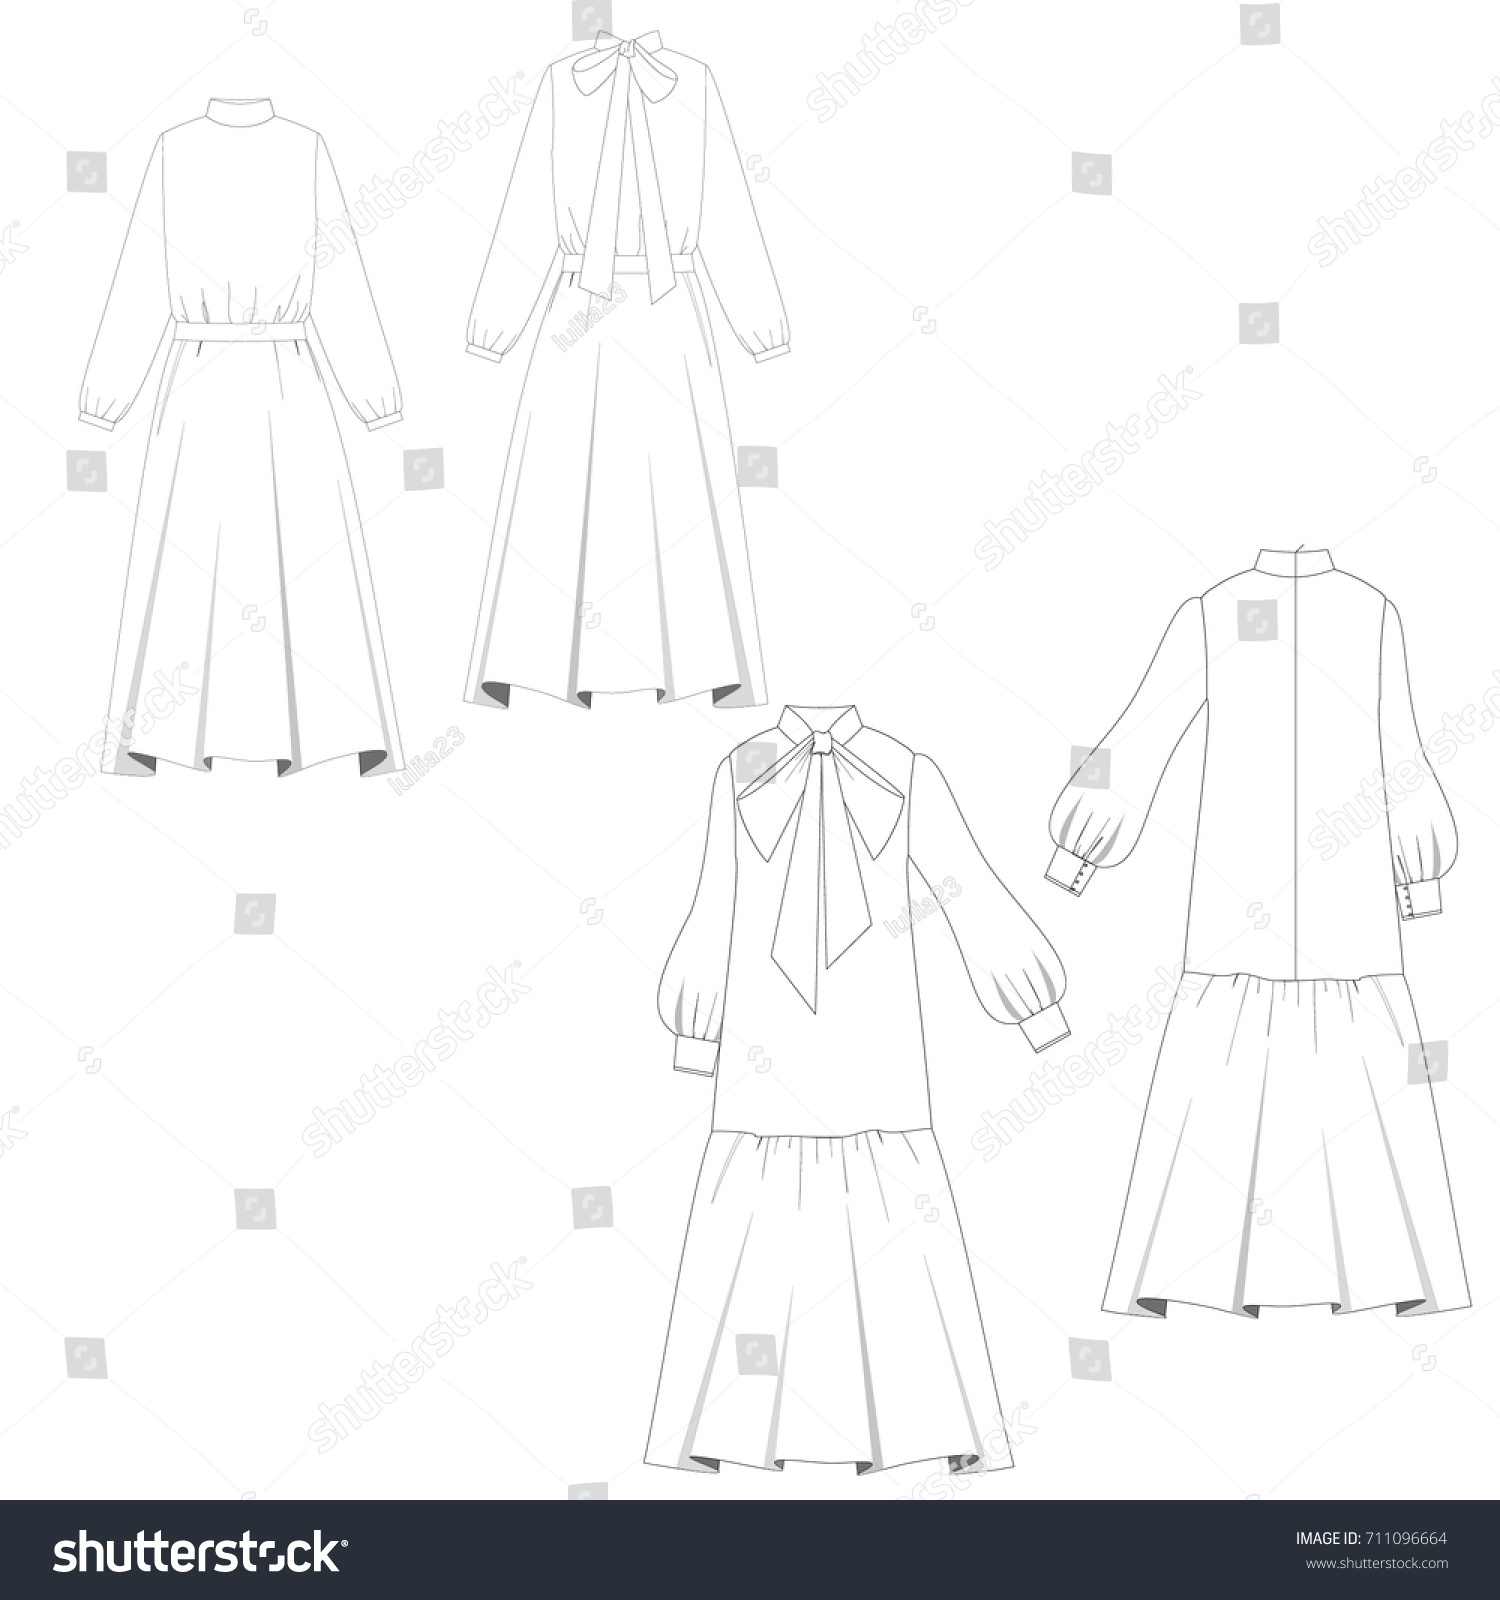 Technical Drawing Sketch Dress Vector Illustration Stock Vector ...